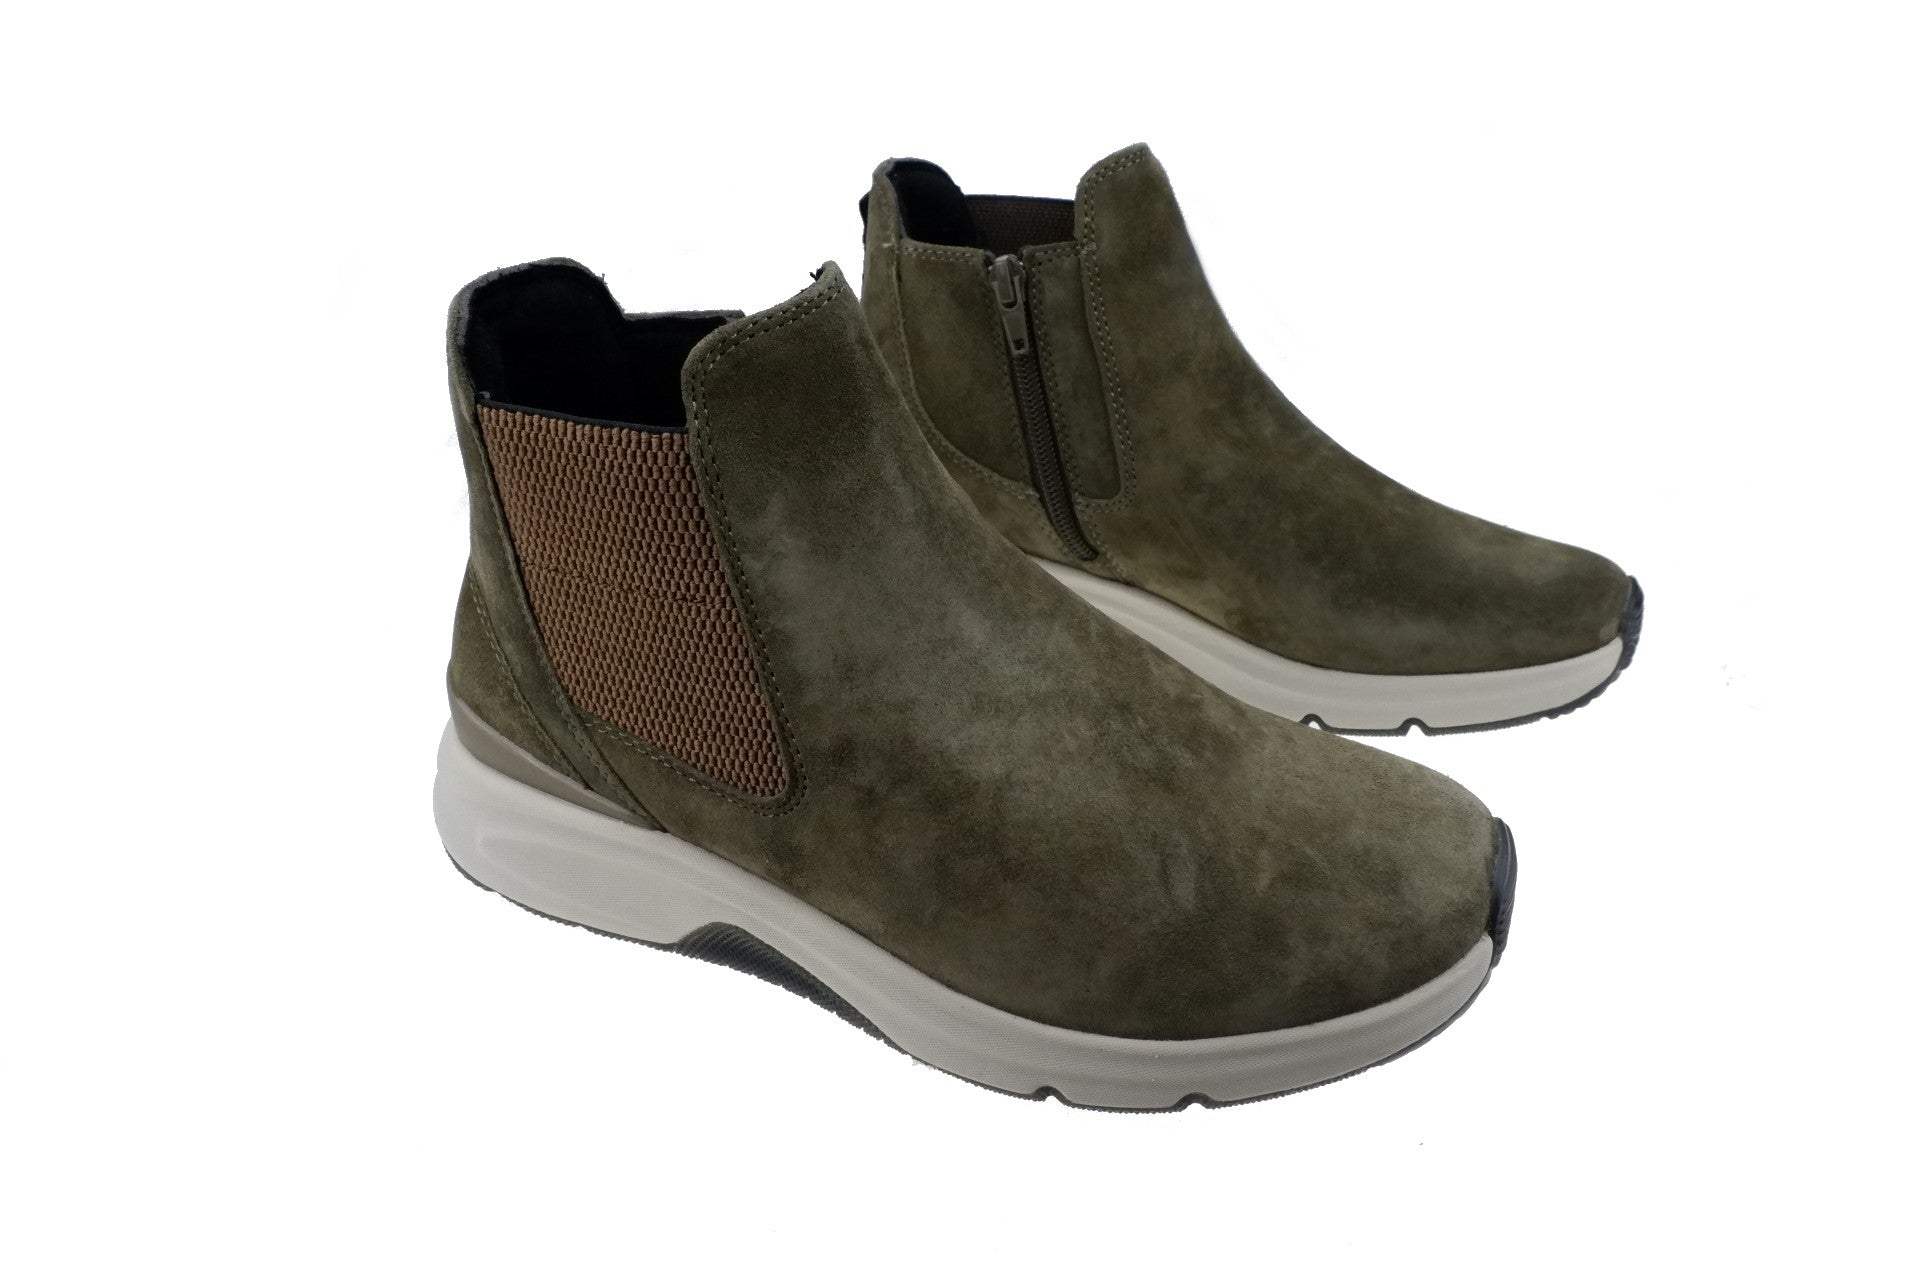 '76.881.33' women's walking boots - Green - Chaplinshoes'76.881.33' women's walking boots - GreenGabor